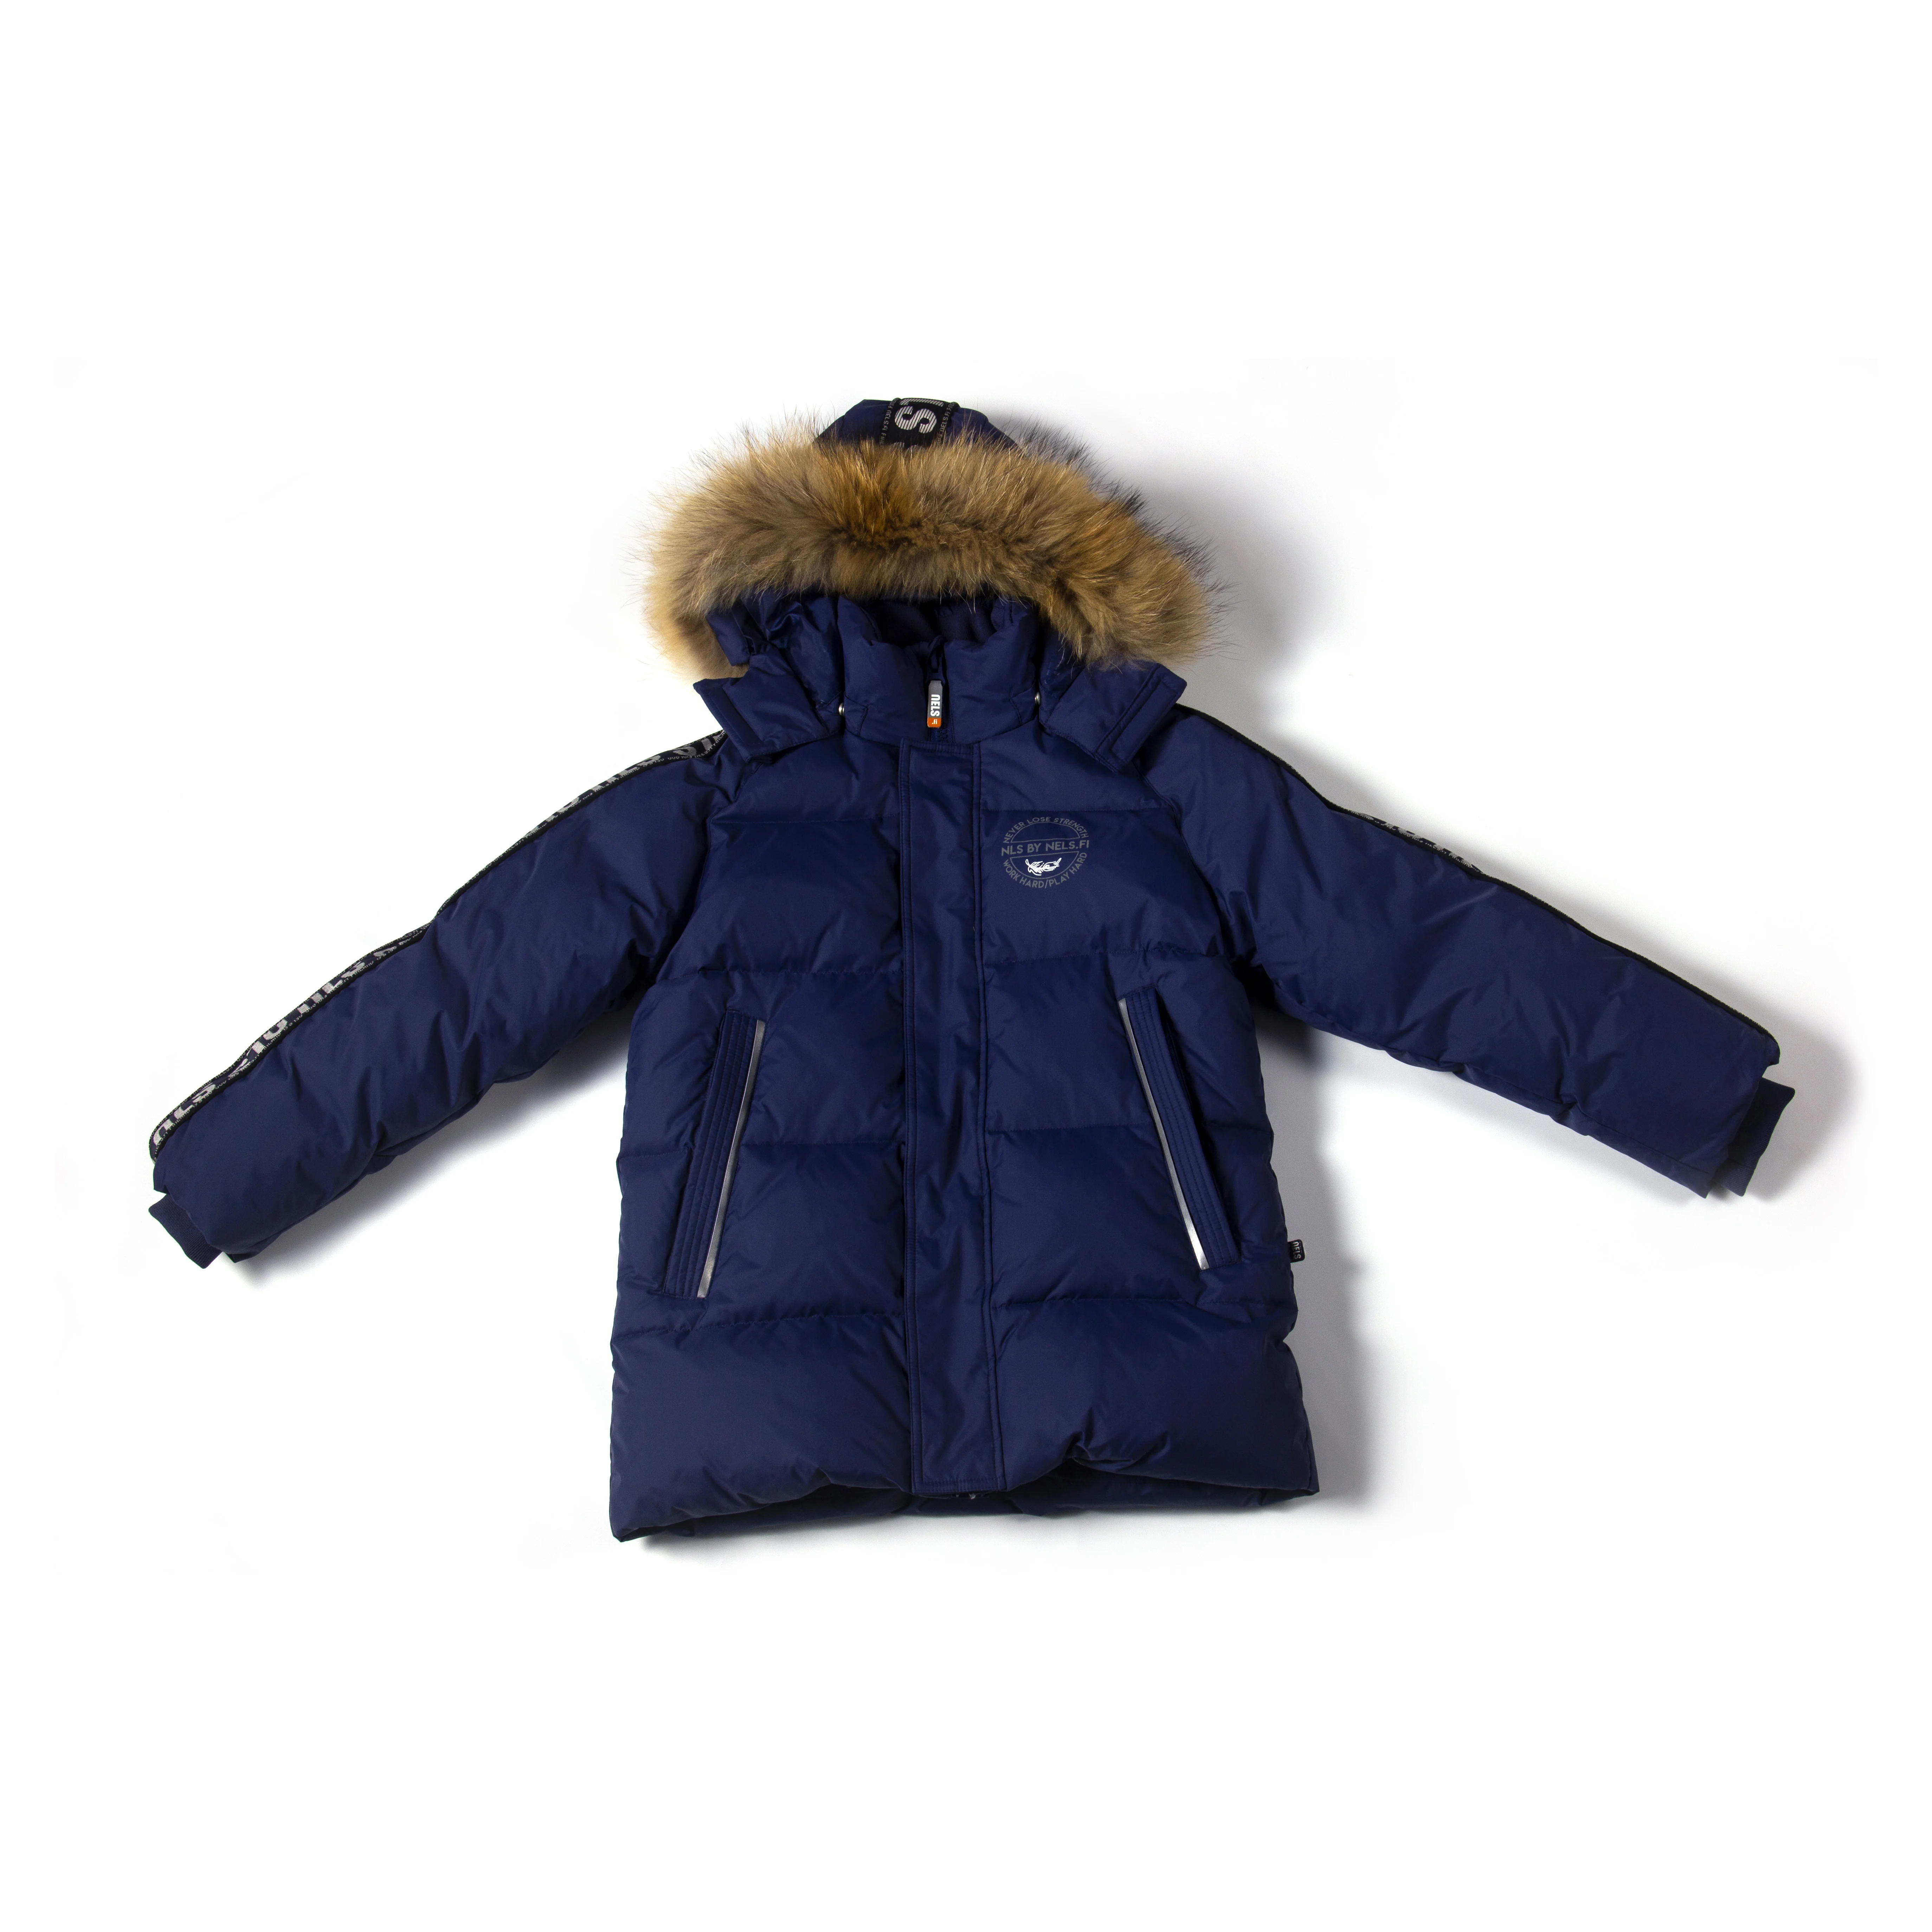 Jianfeng Winter warm long style zipper kids duck down hooded jacket with metal accessories